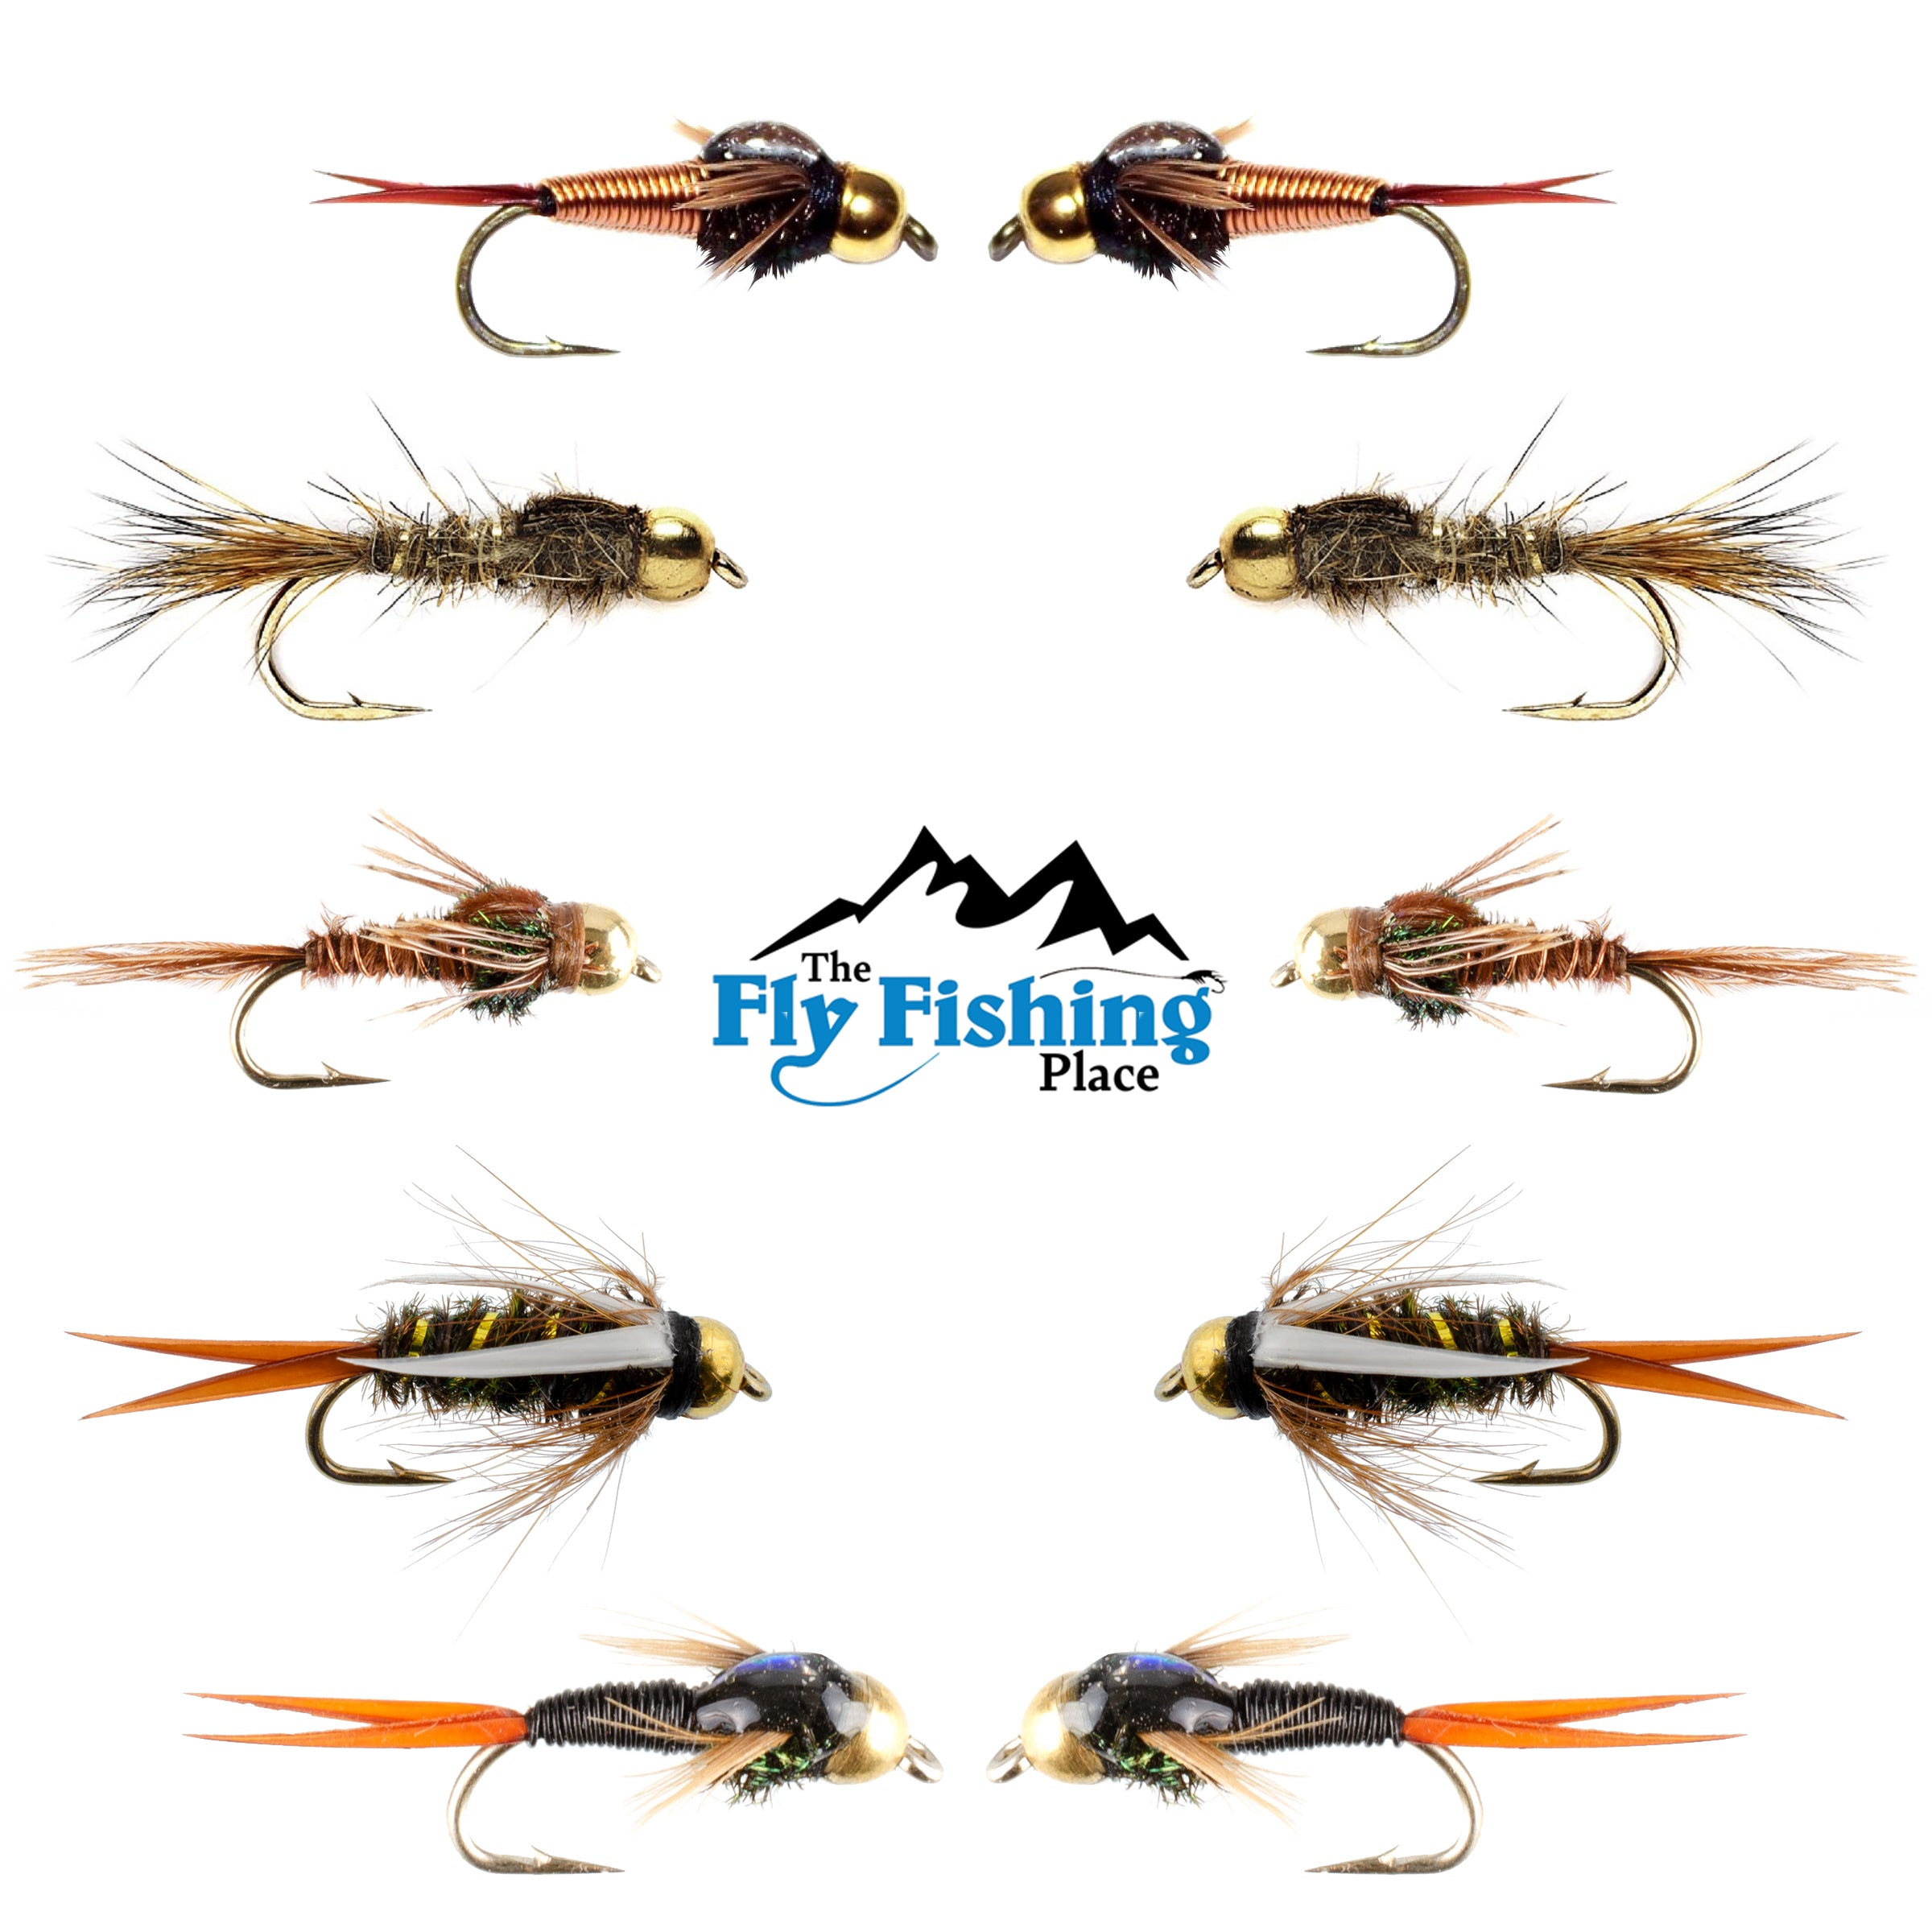 Basics Collection - Copper John and Bead Head Nymph Assortment - 10 Wet Flies - 5 Patterns - Hook Sizes 10, 12, 14, 16